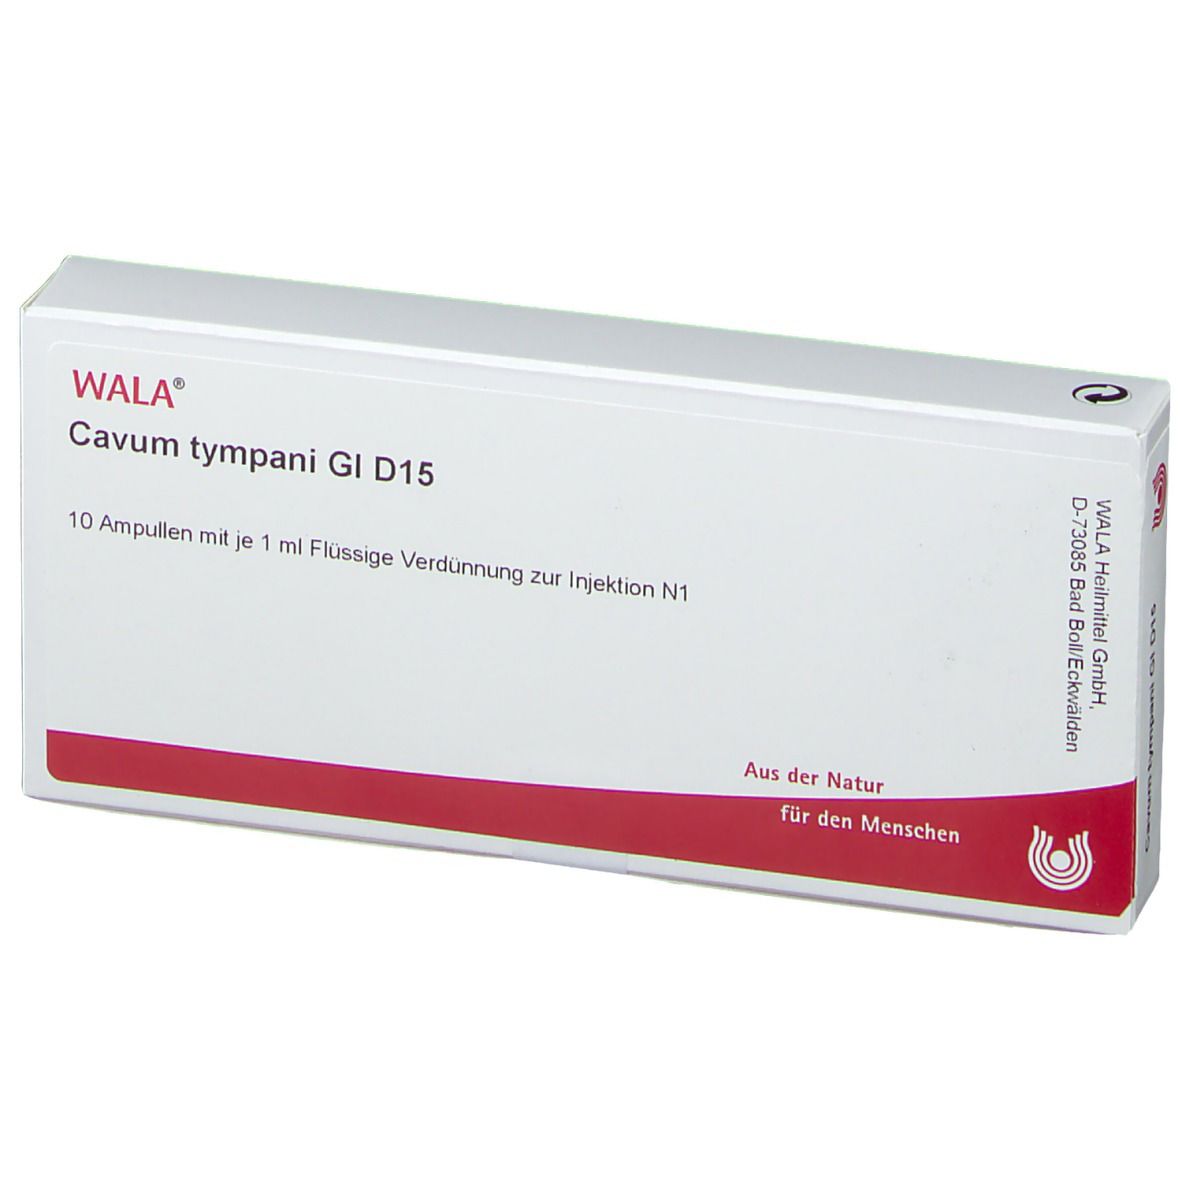 WALA® Cavum tympani Gl D 15